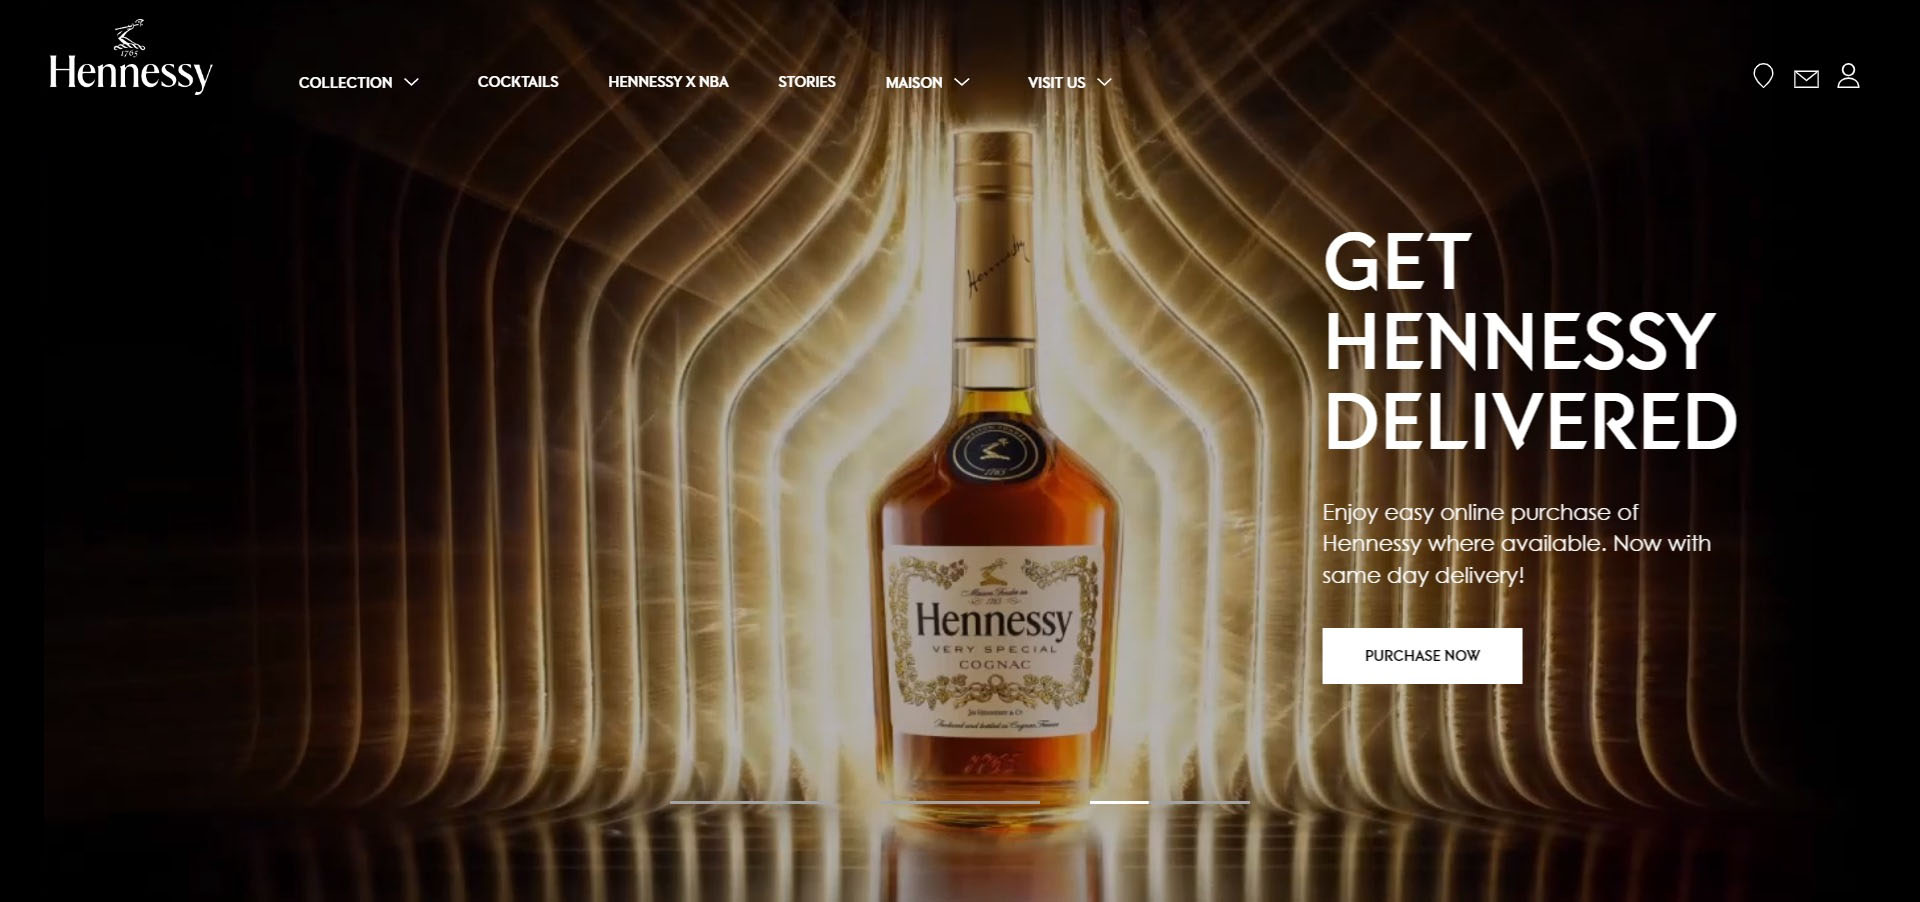 Hennessy website: homepage